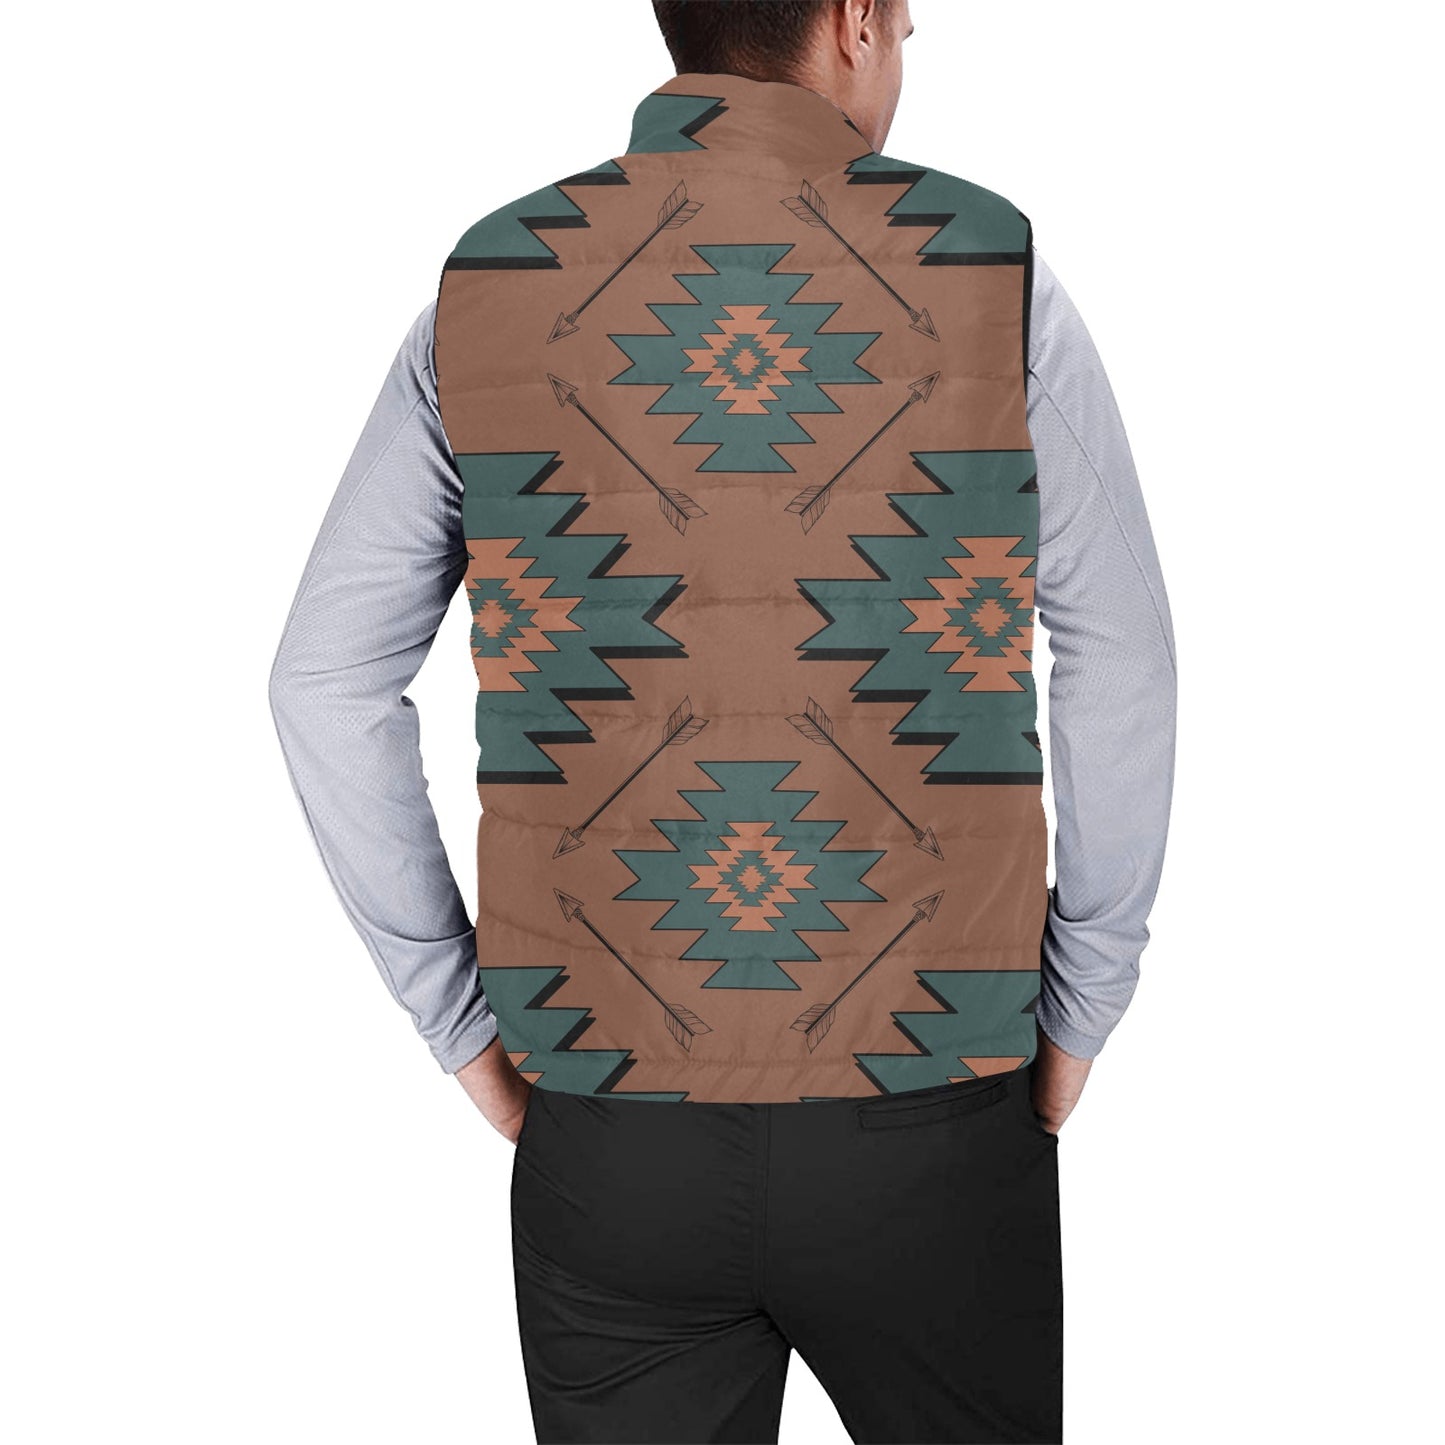 Teal Aztec Men's Puffy Vest